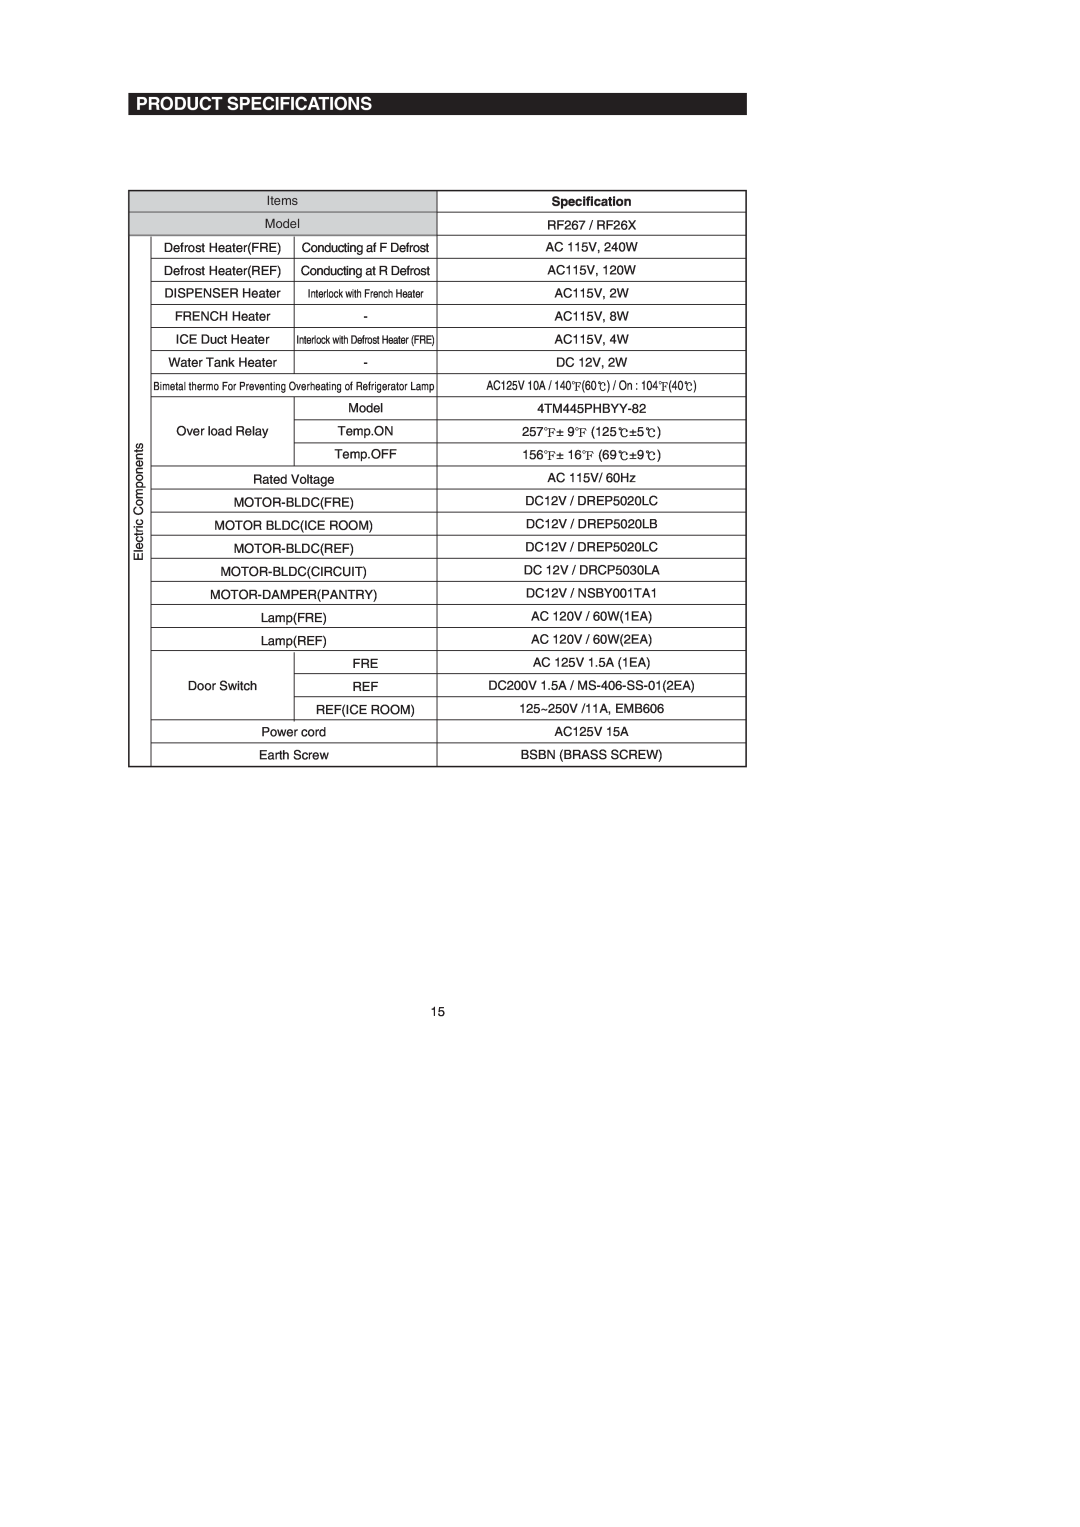 Samsung RF267AERS, RF267AEBP, RF267AE**, RF26XAERS, RF26XAEPN, RF26XAE** Product Specifications, Conducting at R Defrost 